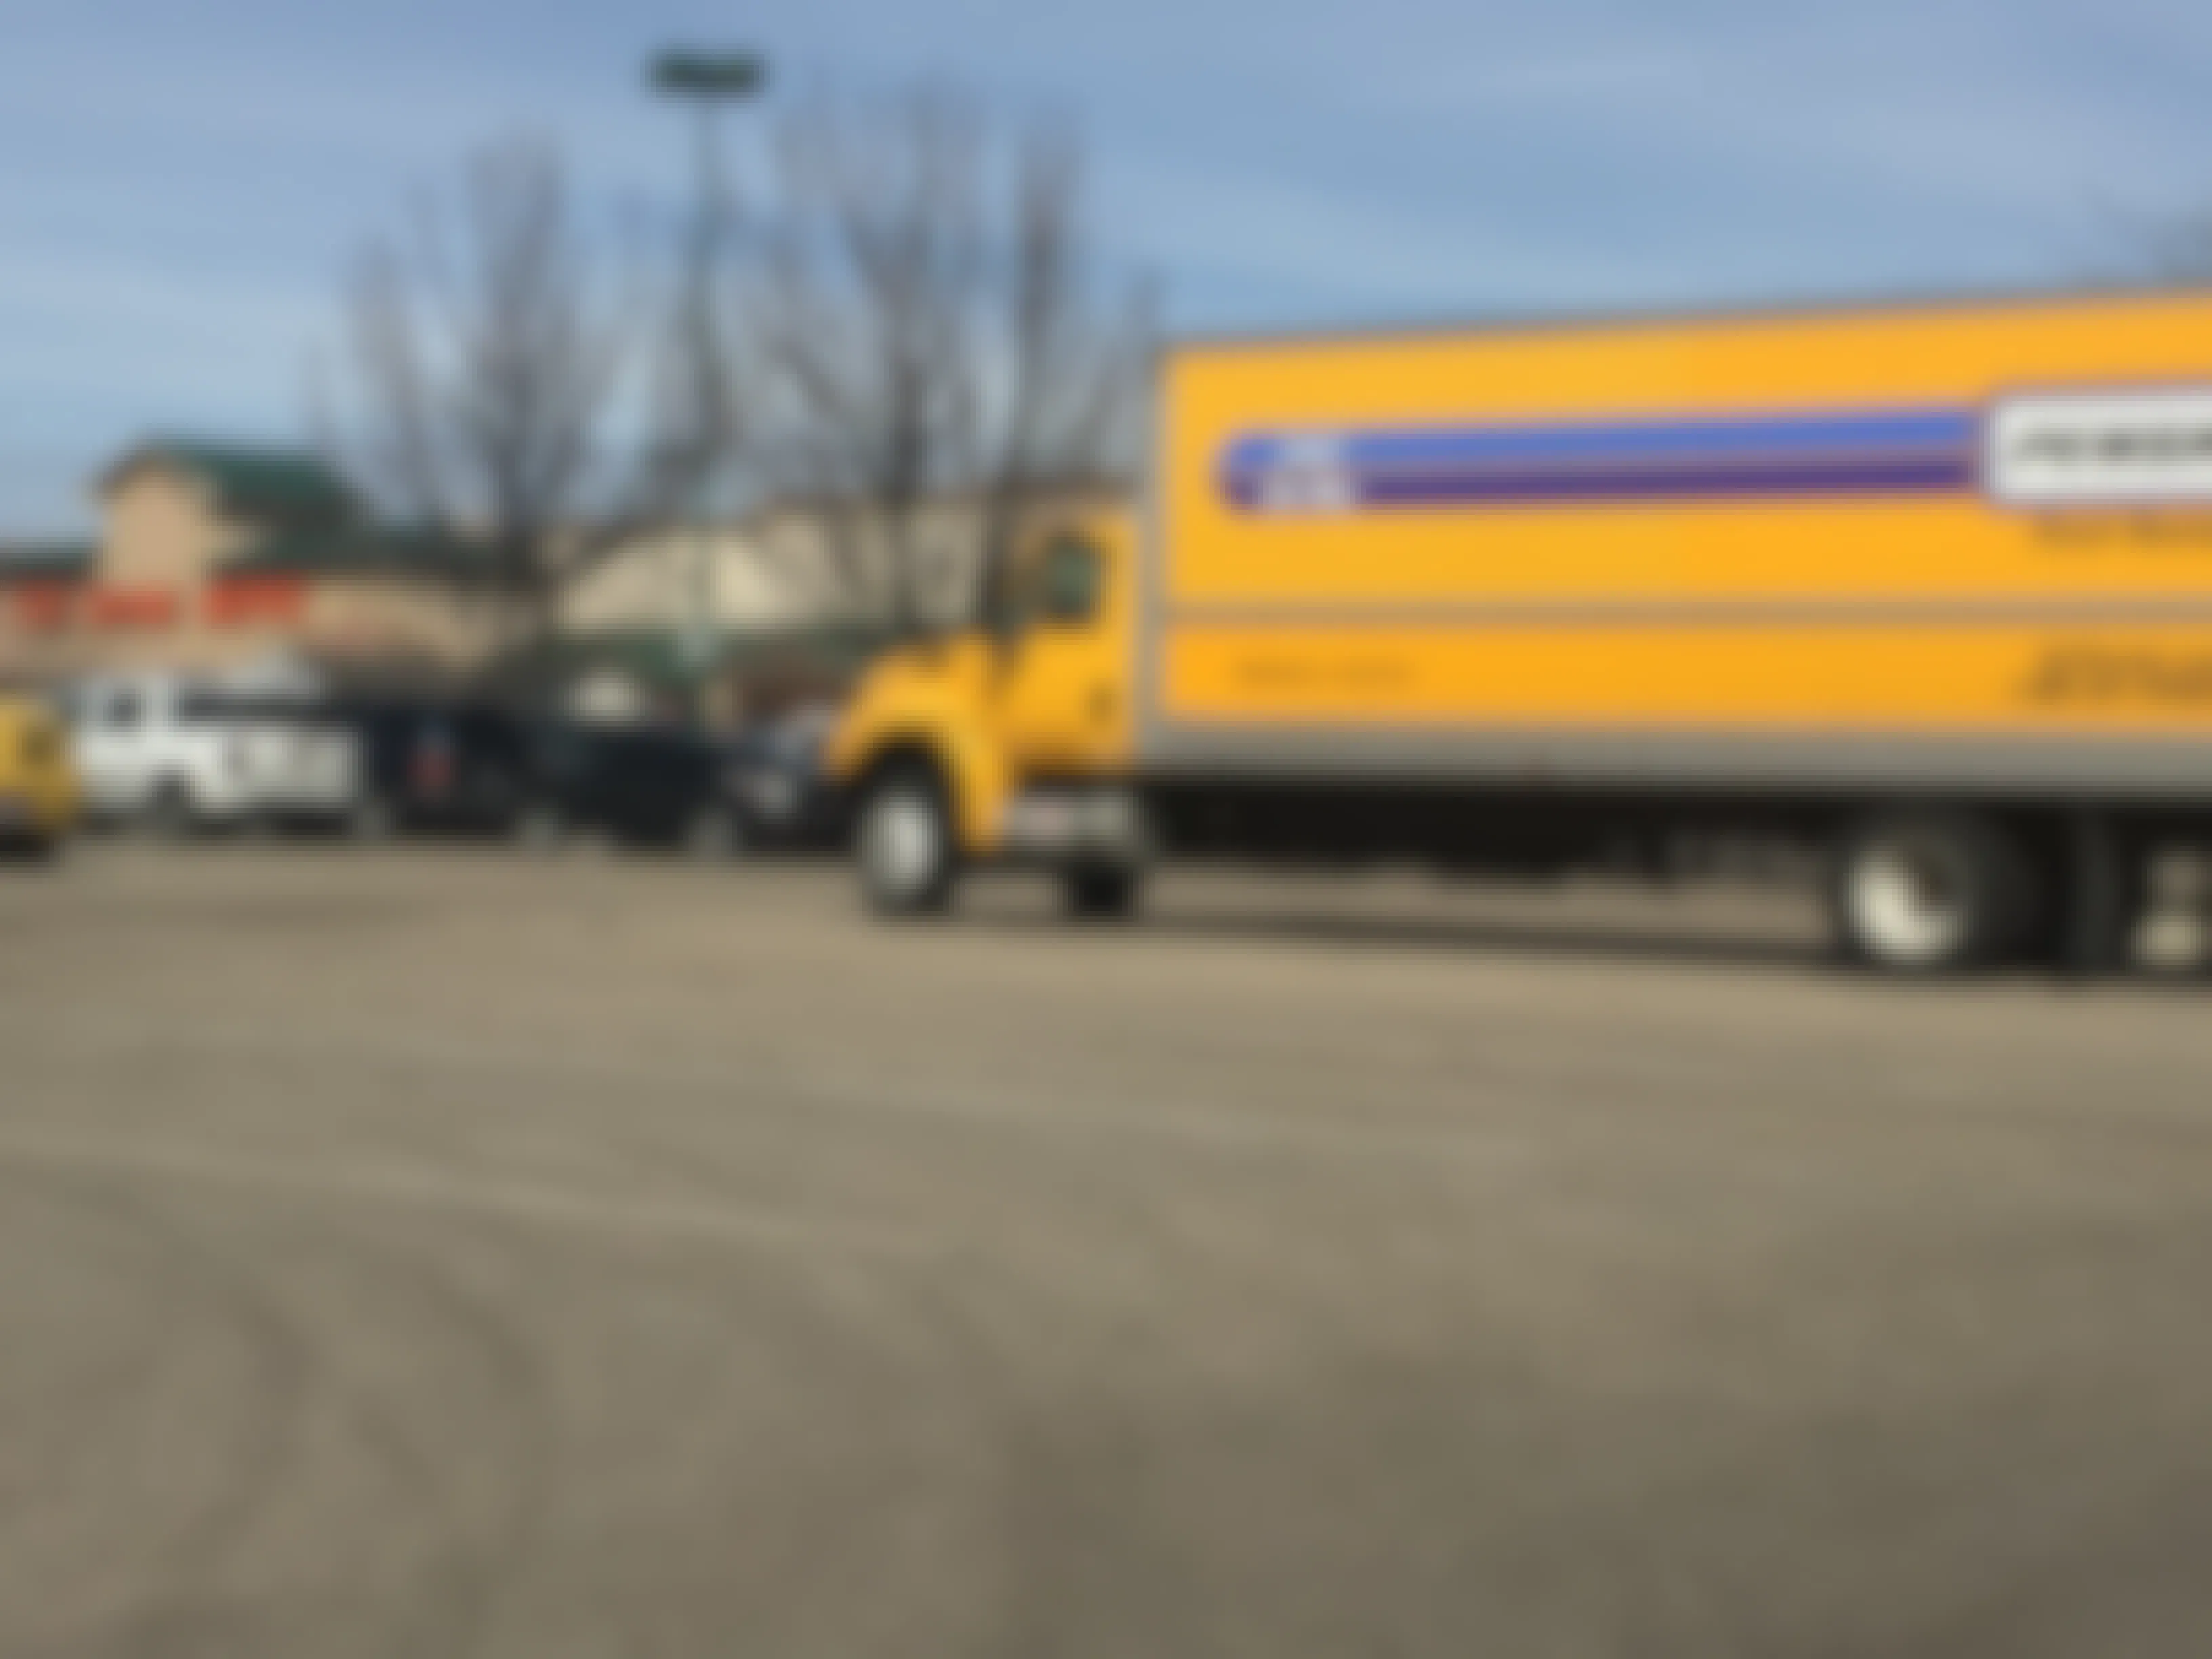 Penske truck in front of Home Depot